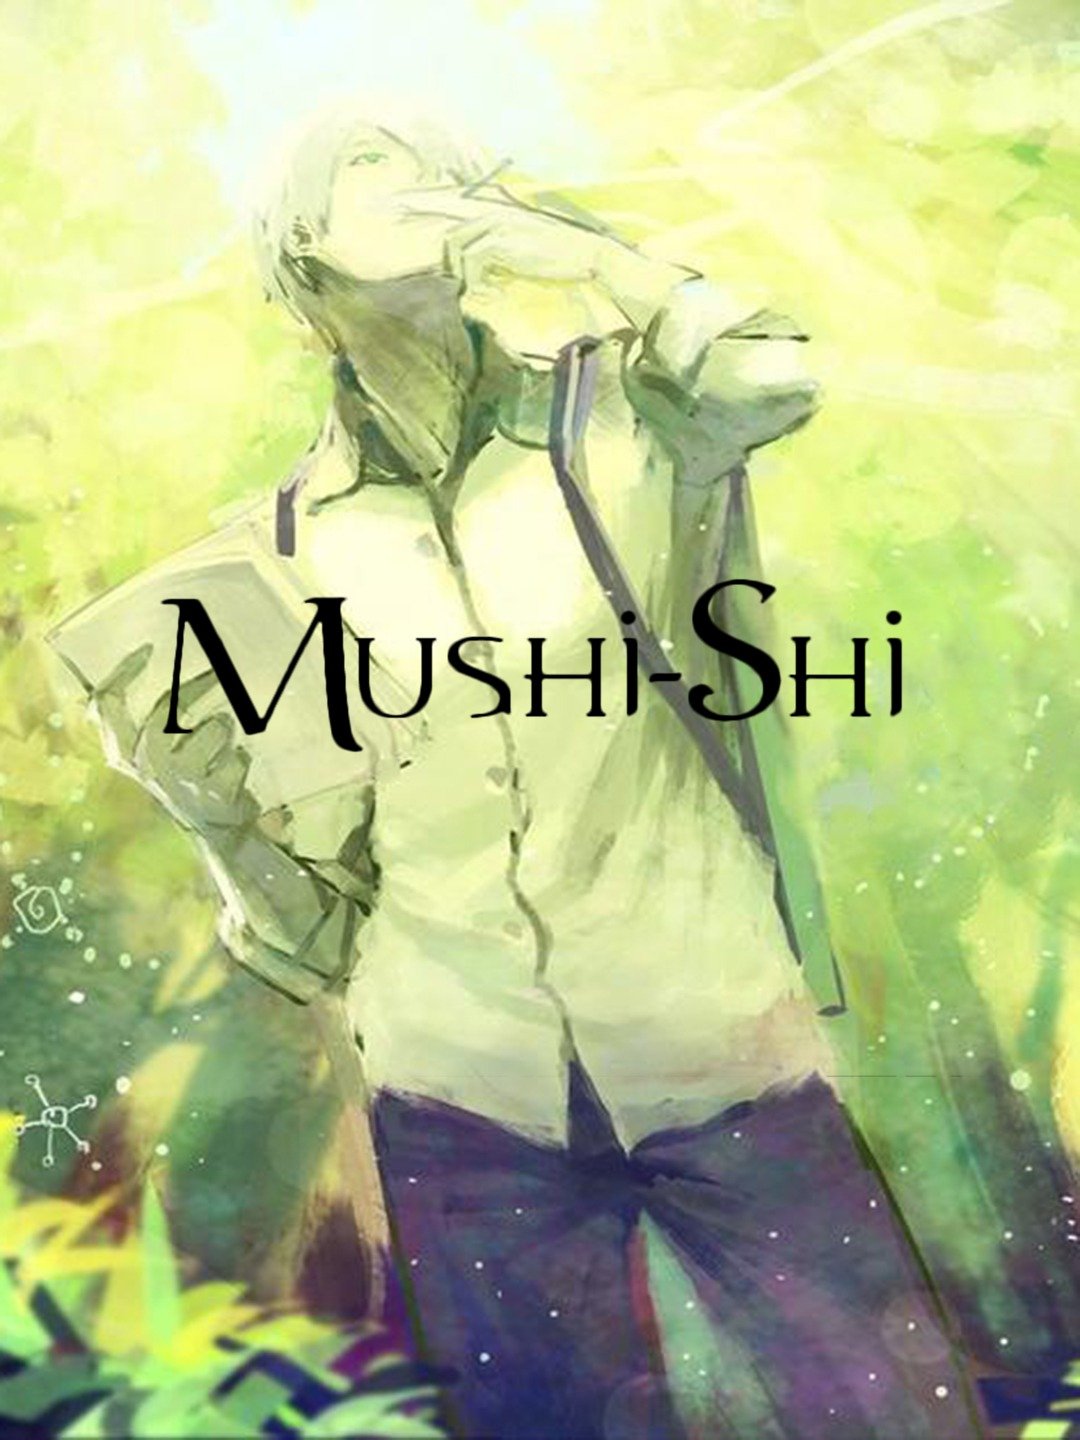 Mushishi  A SpoilerFree Review  ranime